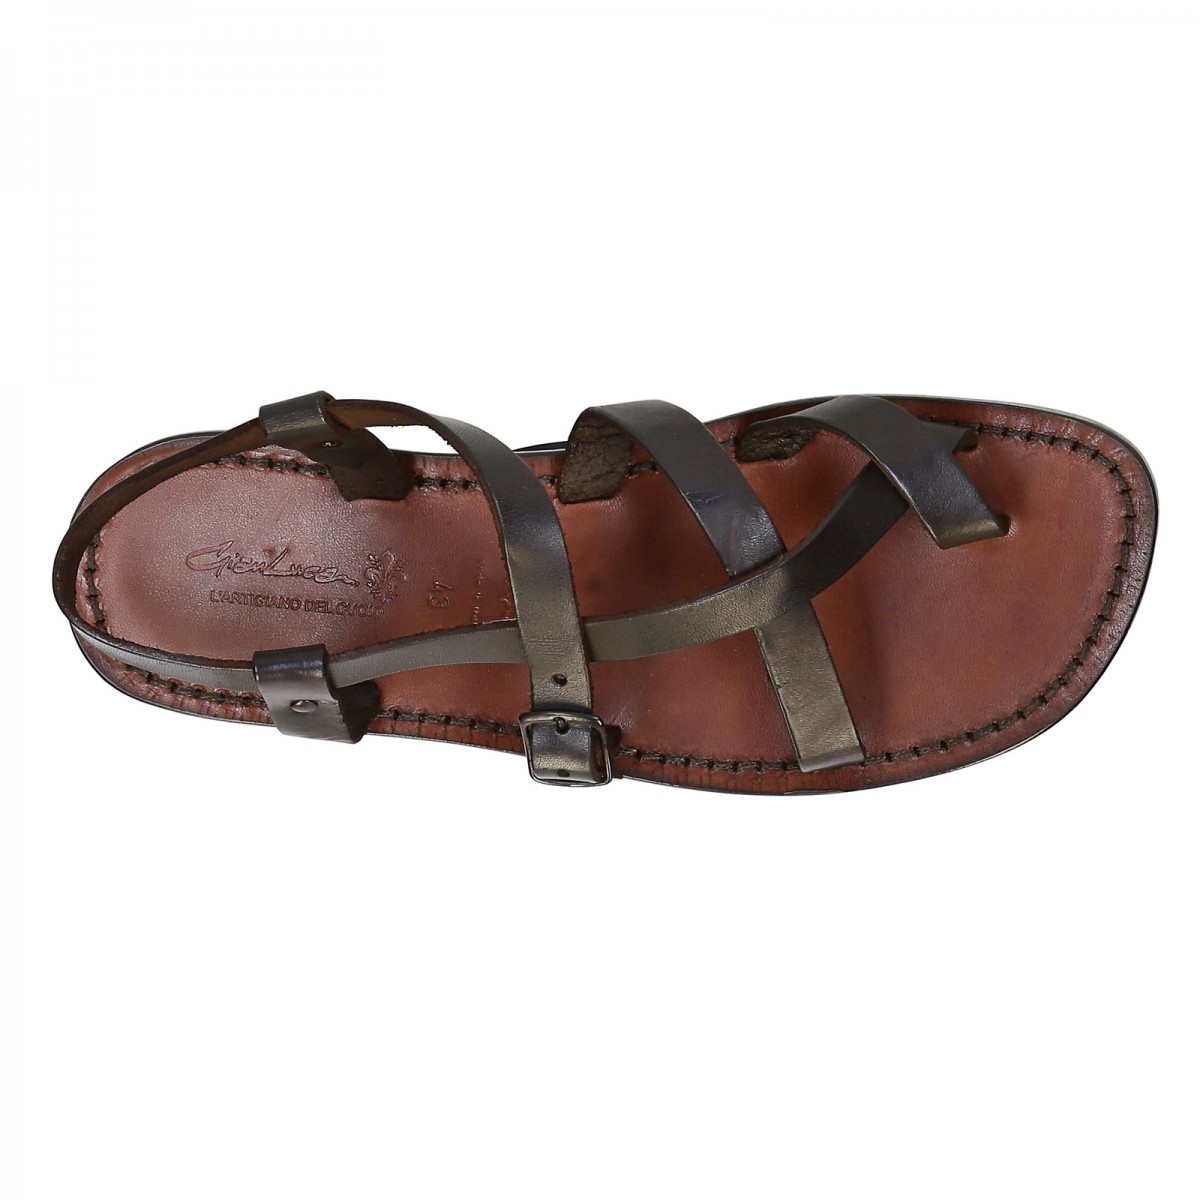 Handmade men's sandals in dark brown leather | The leather craftsmen